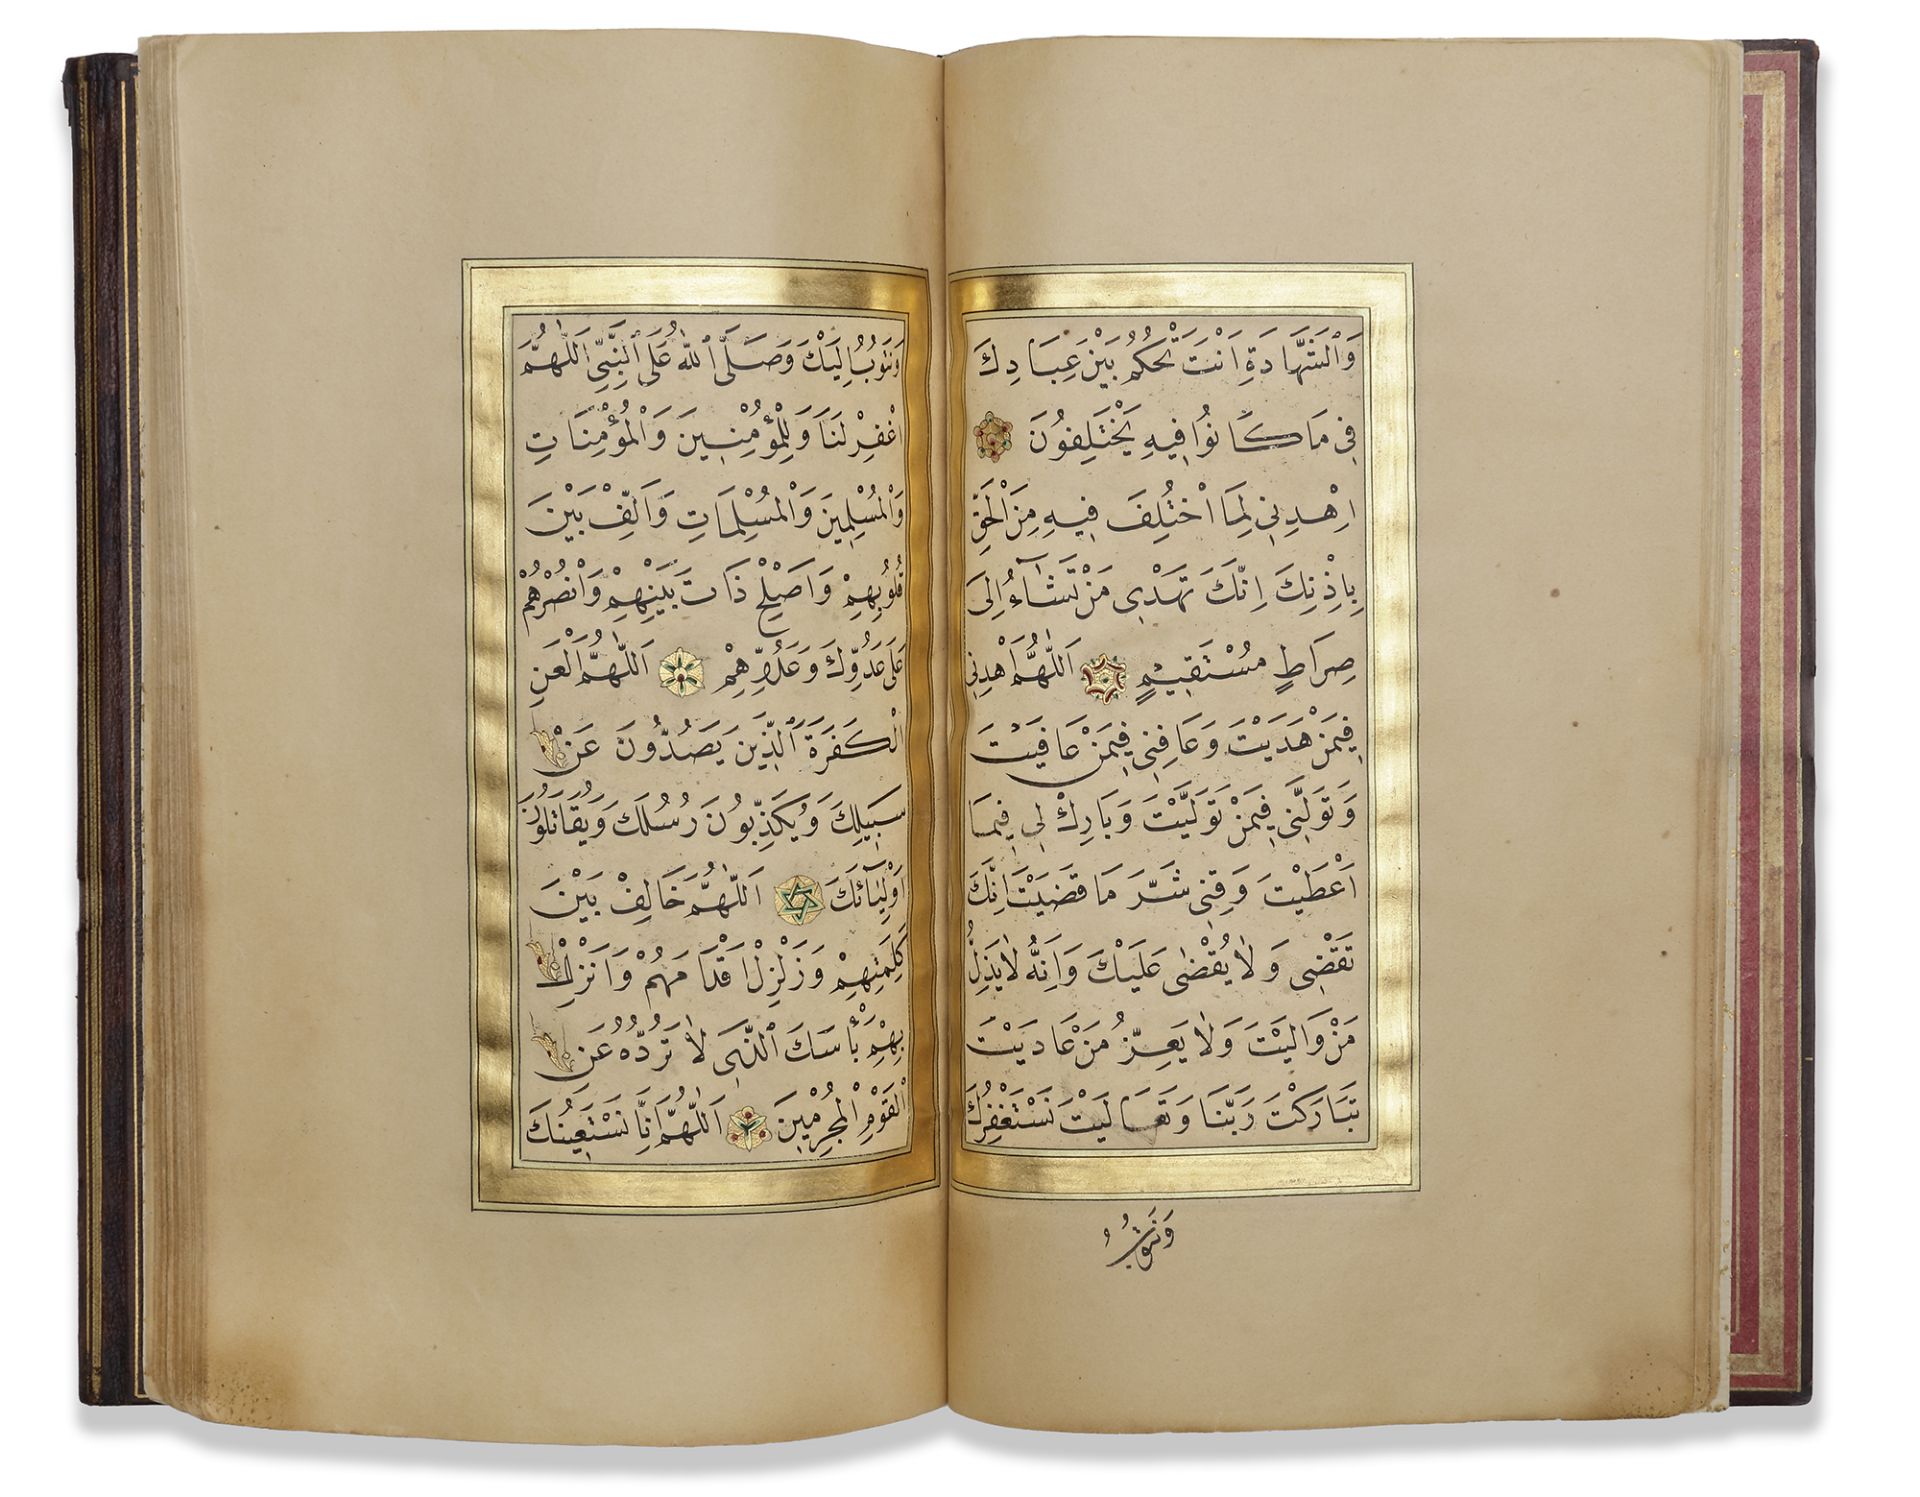 AN ILLUMINATED OTTOMAN PRAYER BOOK SIGNED BY ABDULLAH, TURKEY, 18TH CENTURY - Image 2 of 5